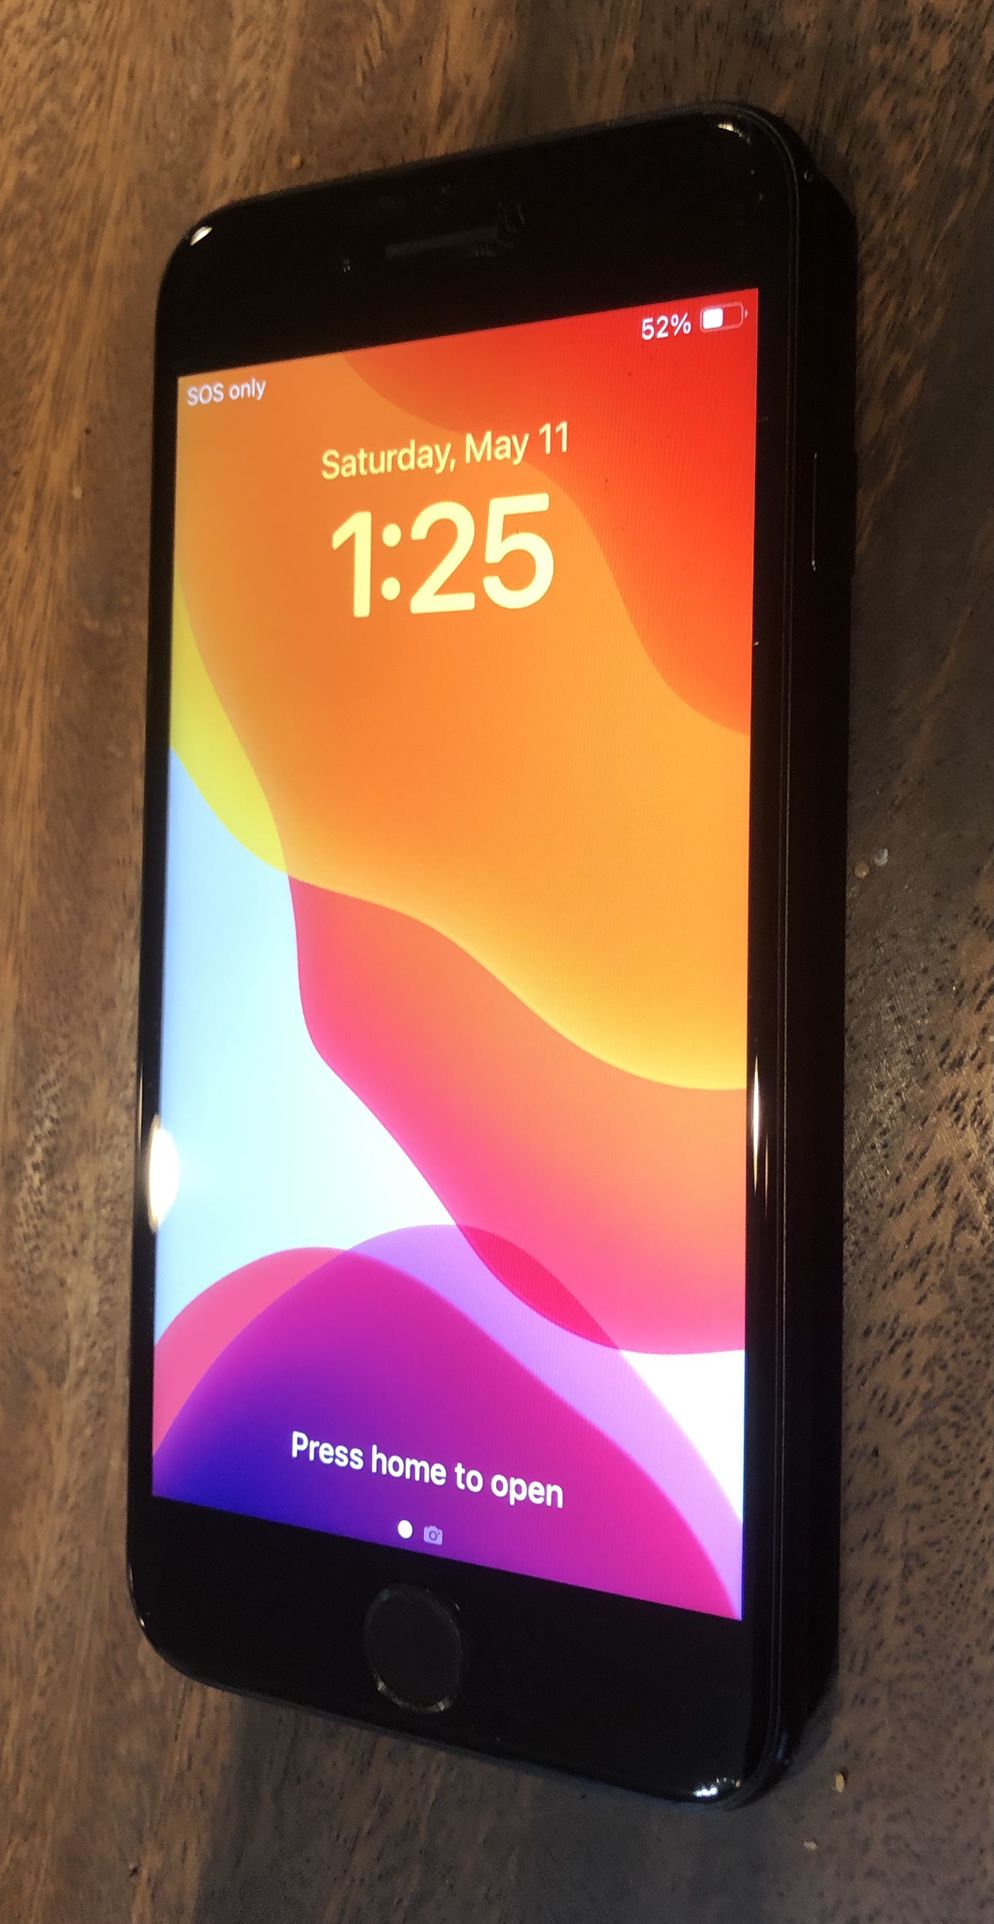 Gorgeous Iphone 8 64GB Factory Unlocked LIKE NEW